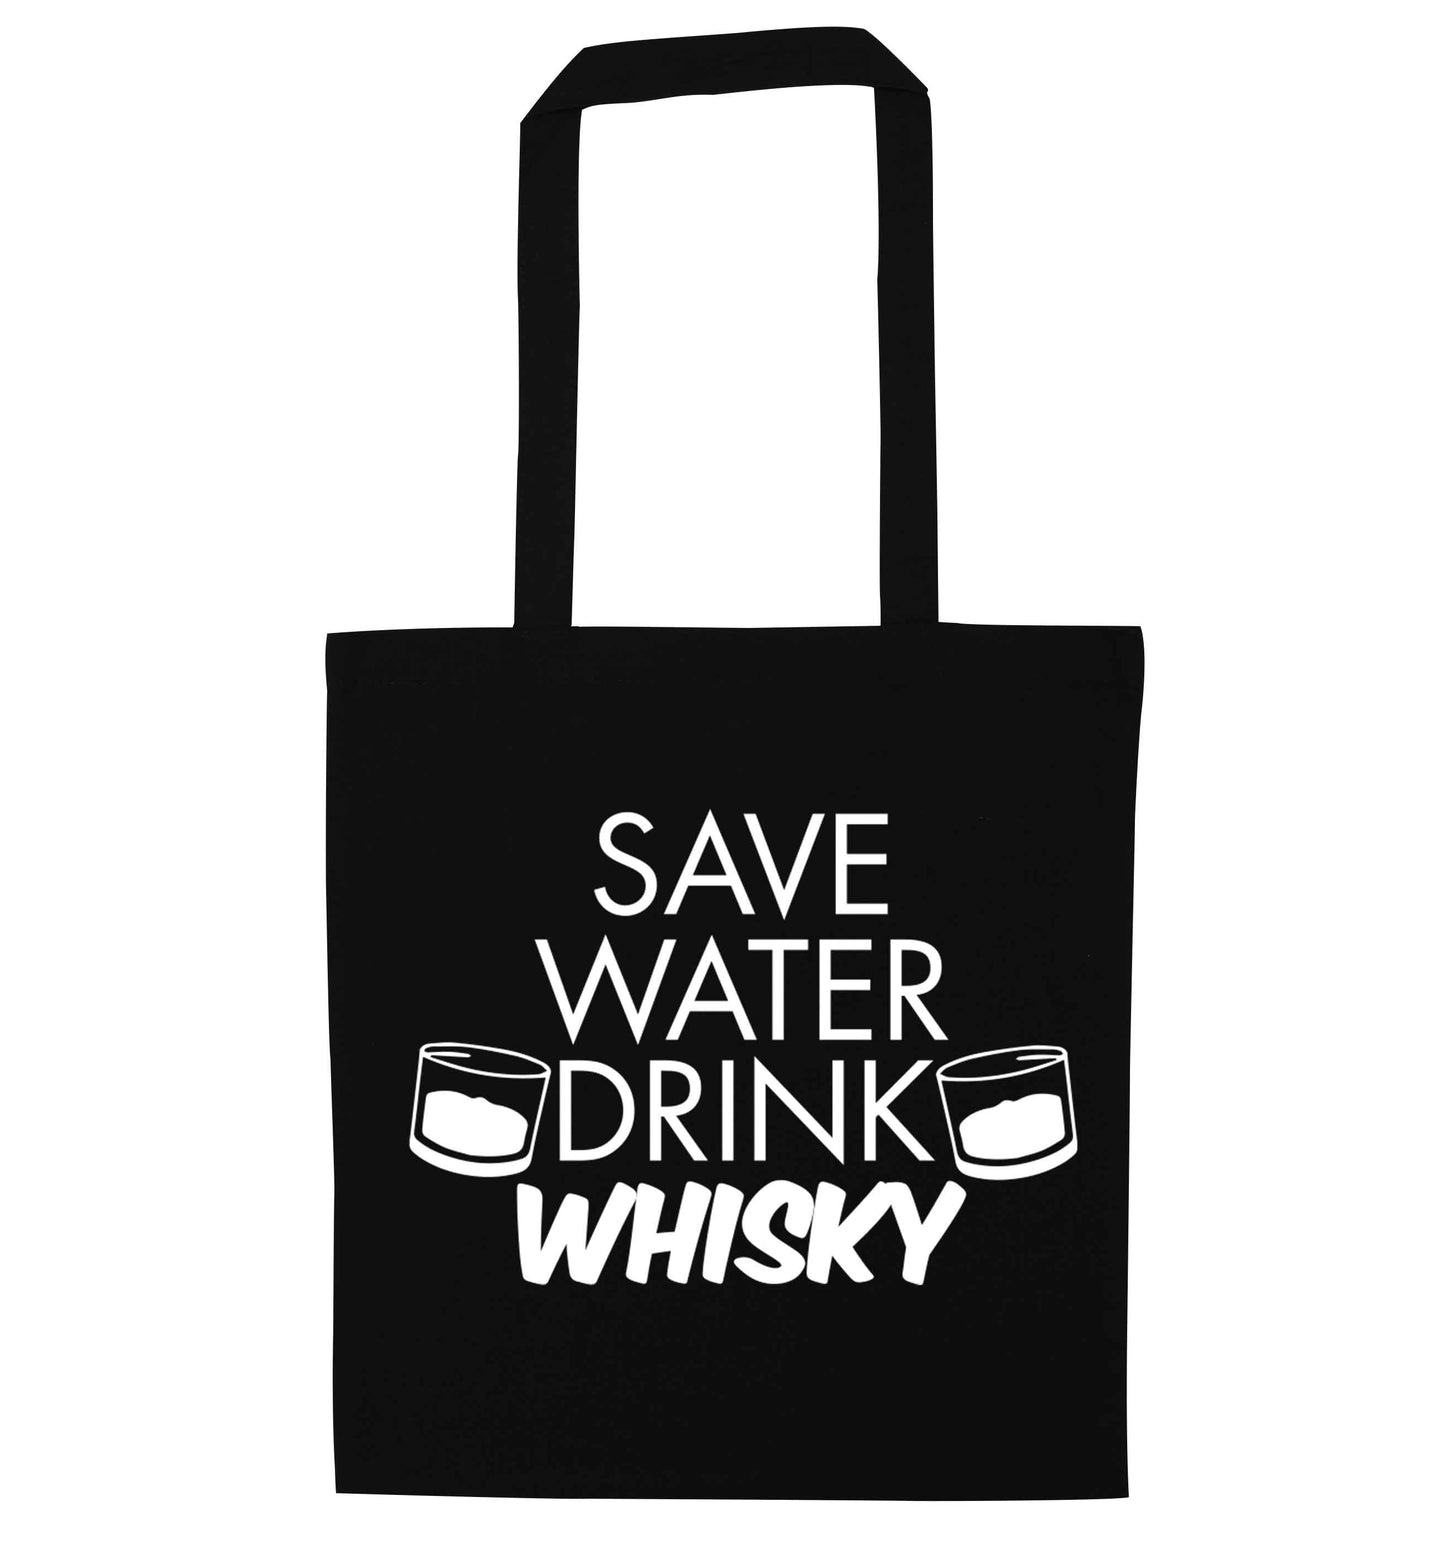 Save water drink whisky black tote bag